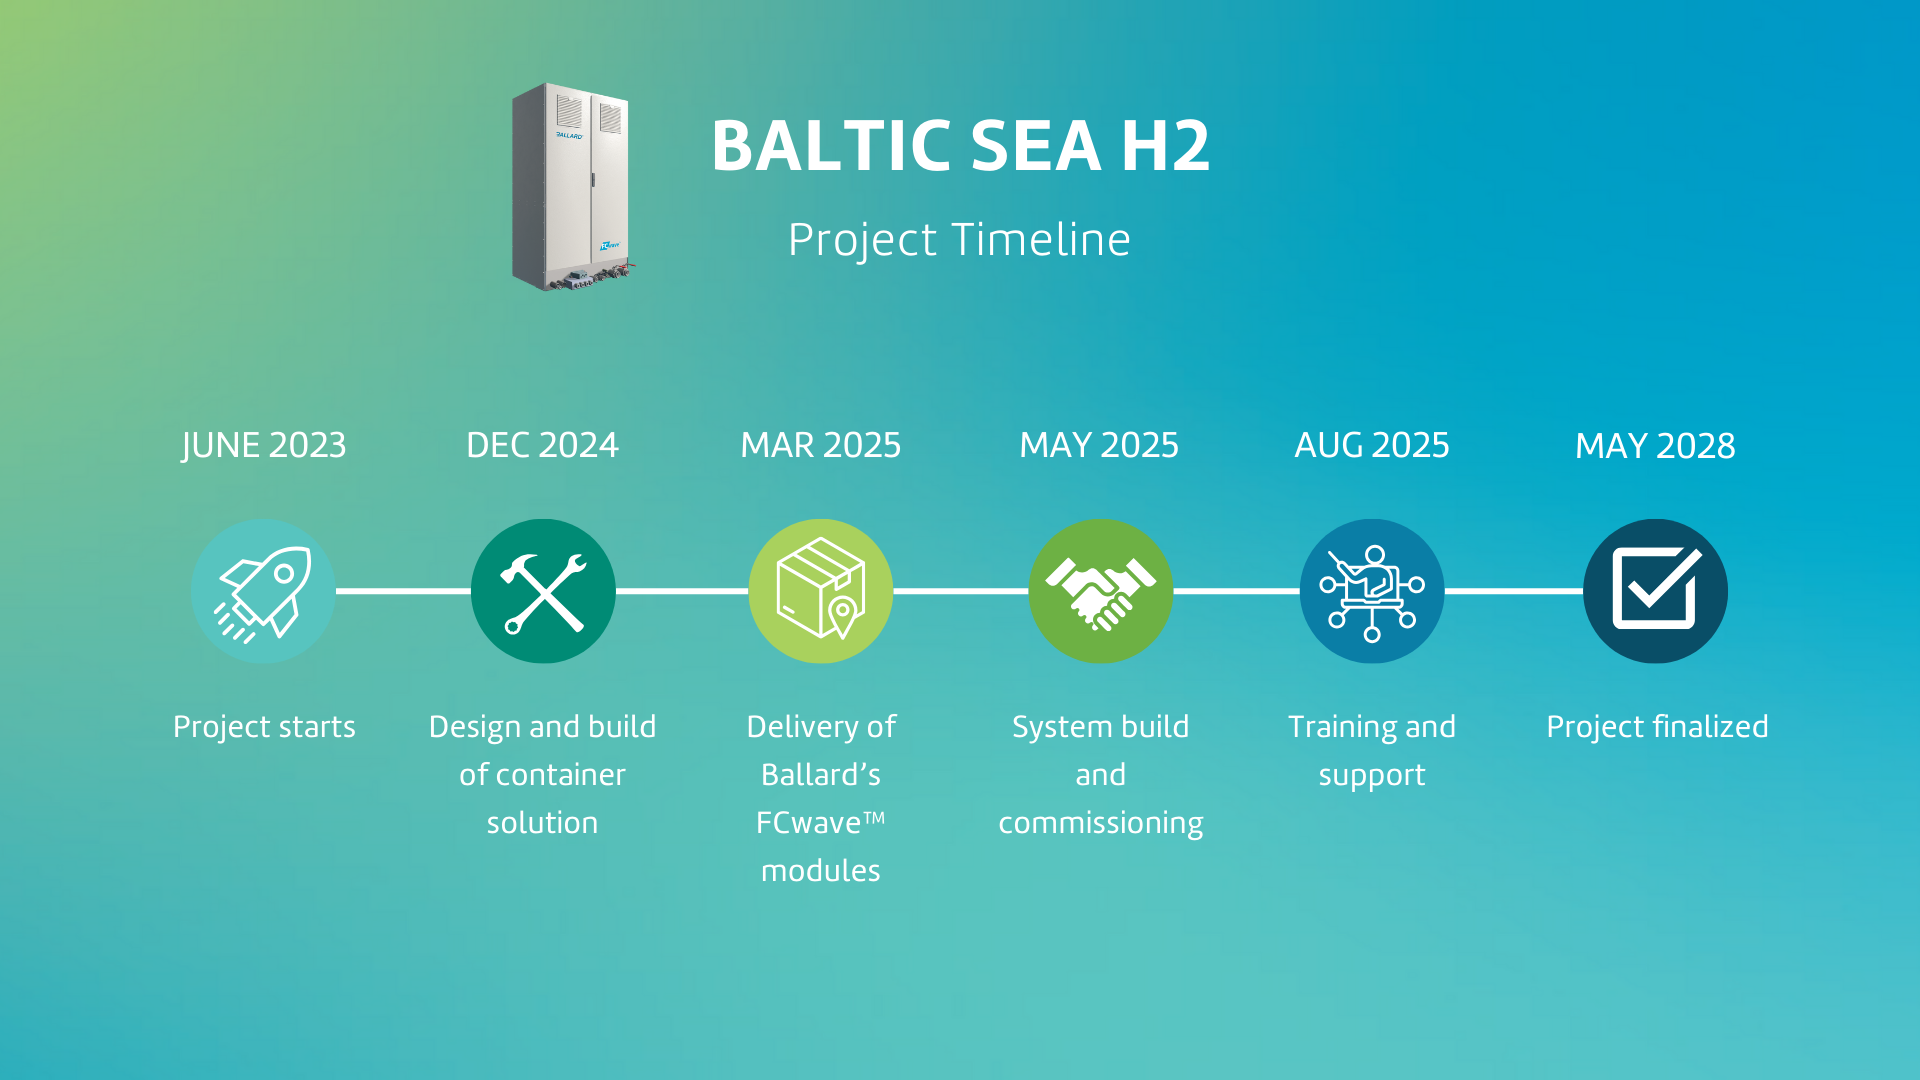 The BalticSeaH2 project timeline